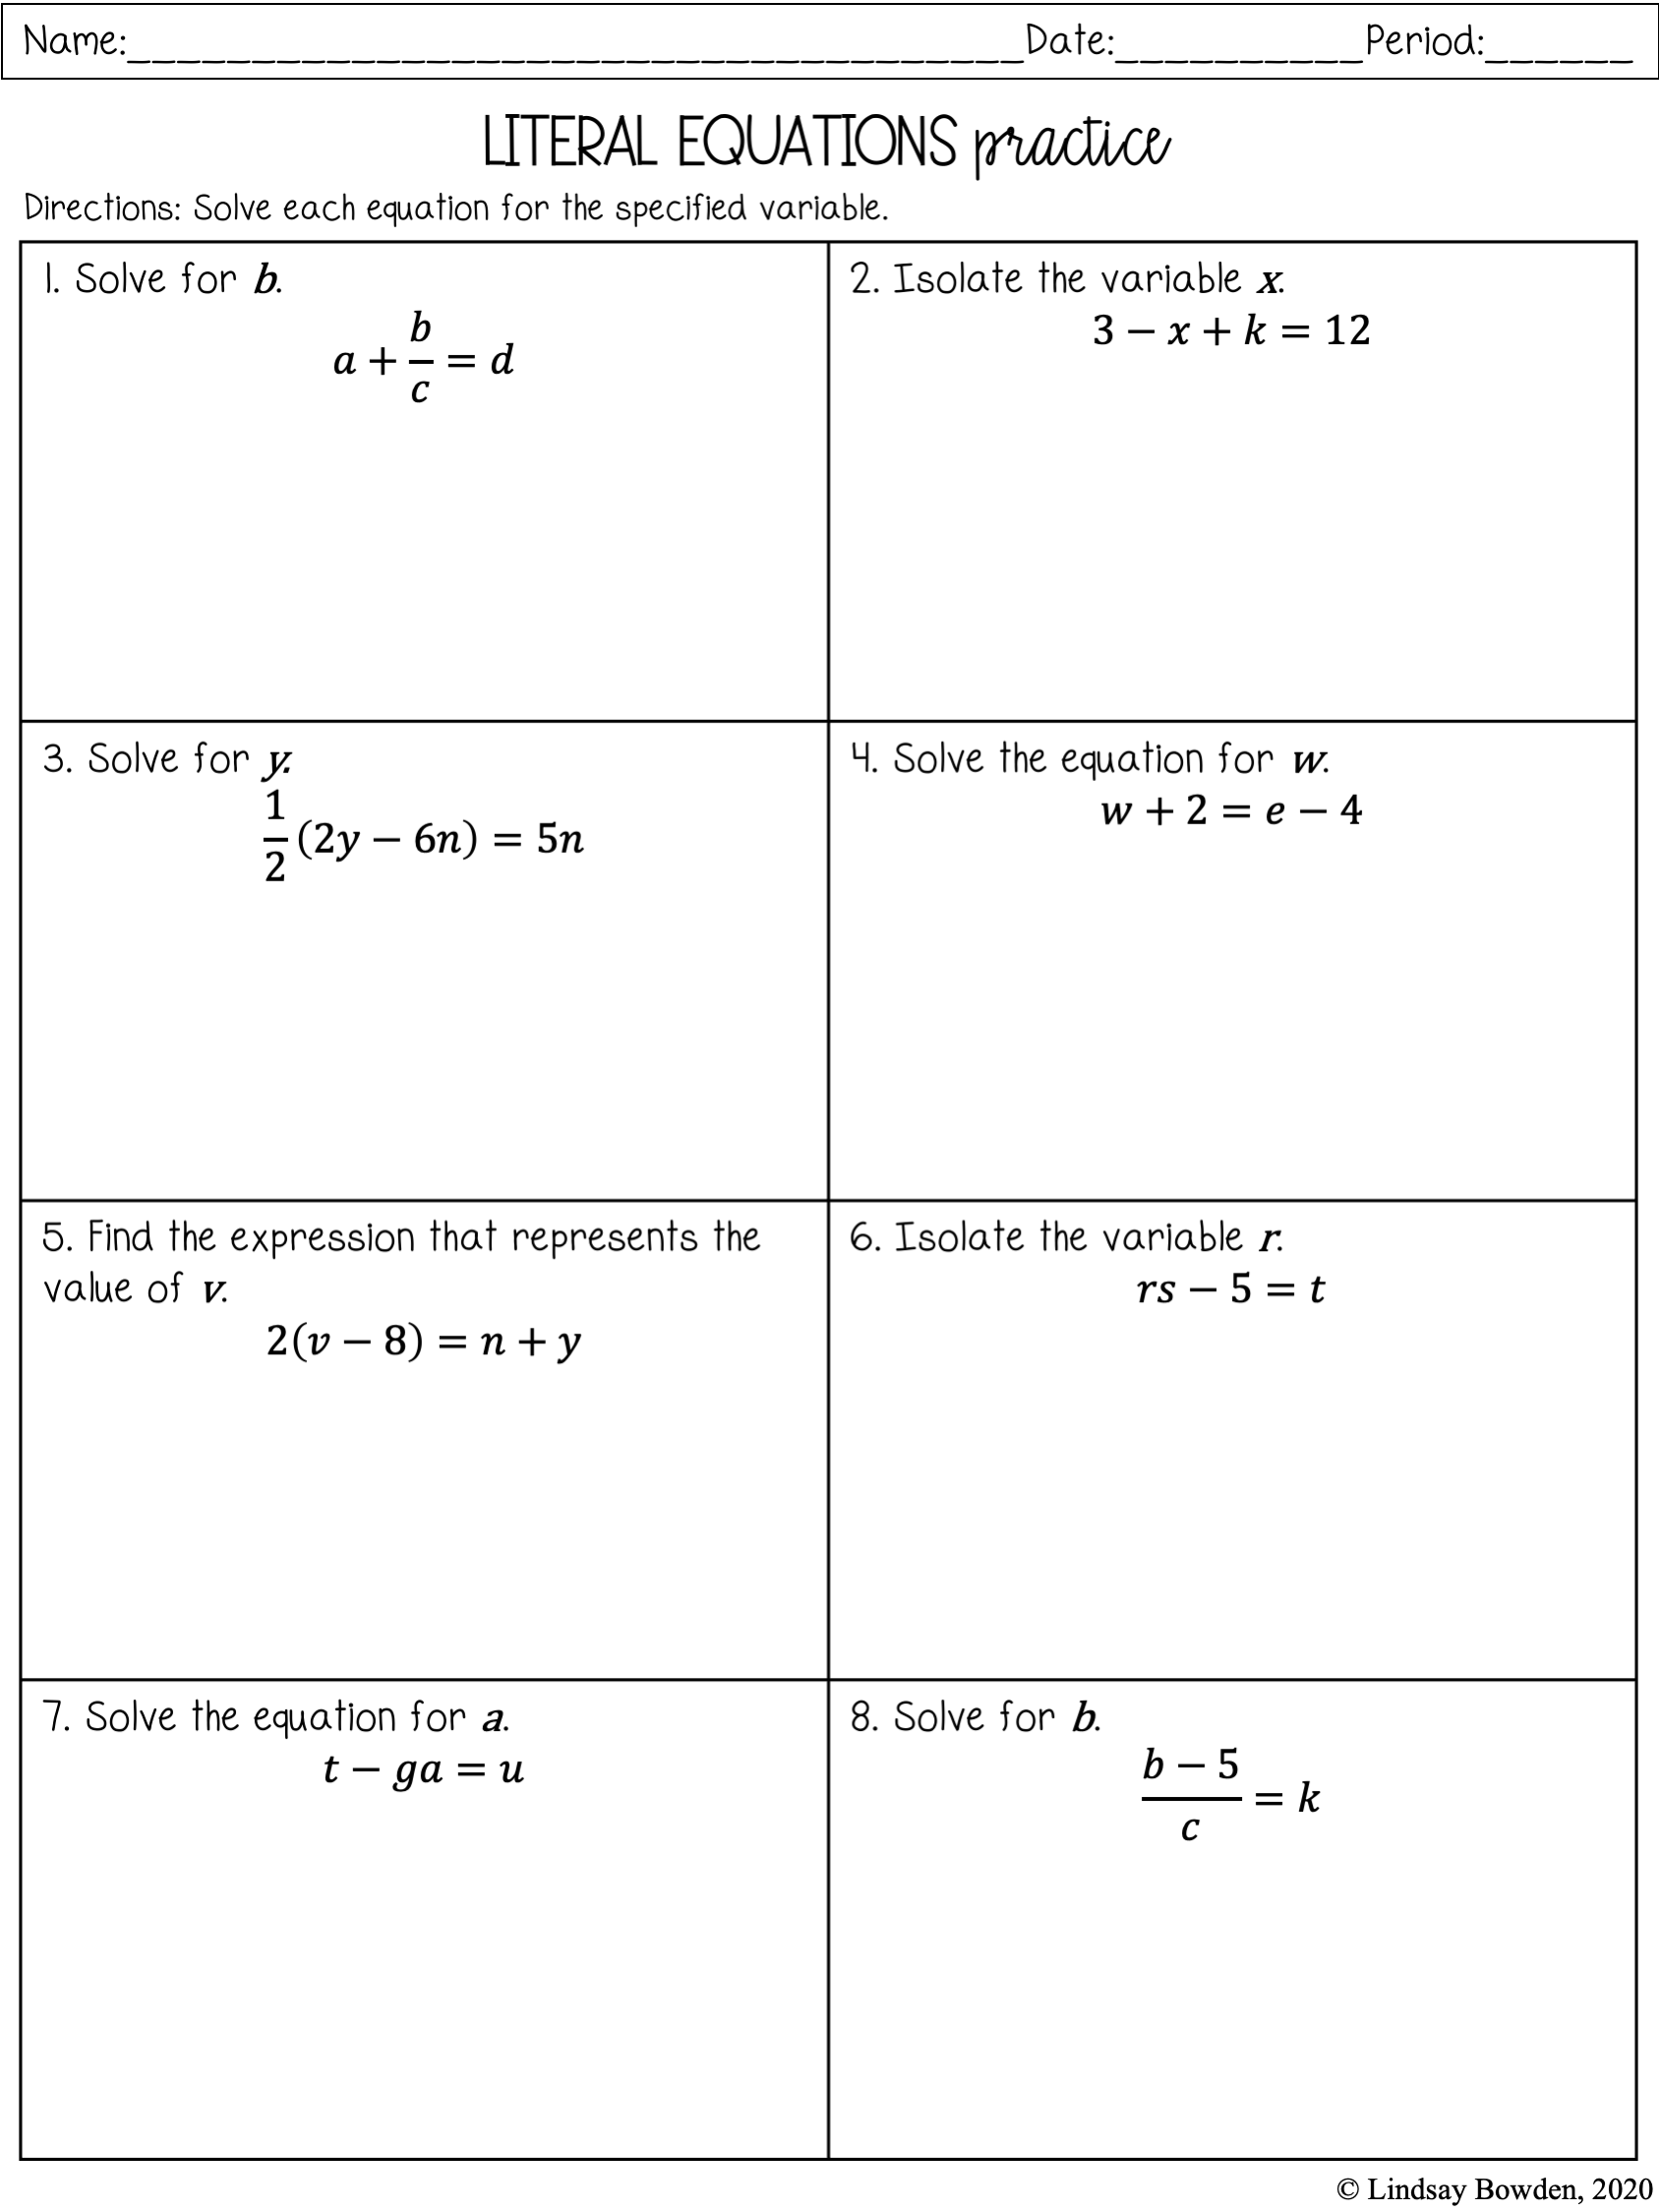 Literal Equations Notes and Worksheets - Lindsay Bowden Regarding Solve Literal Equations Worksheet